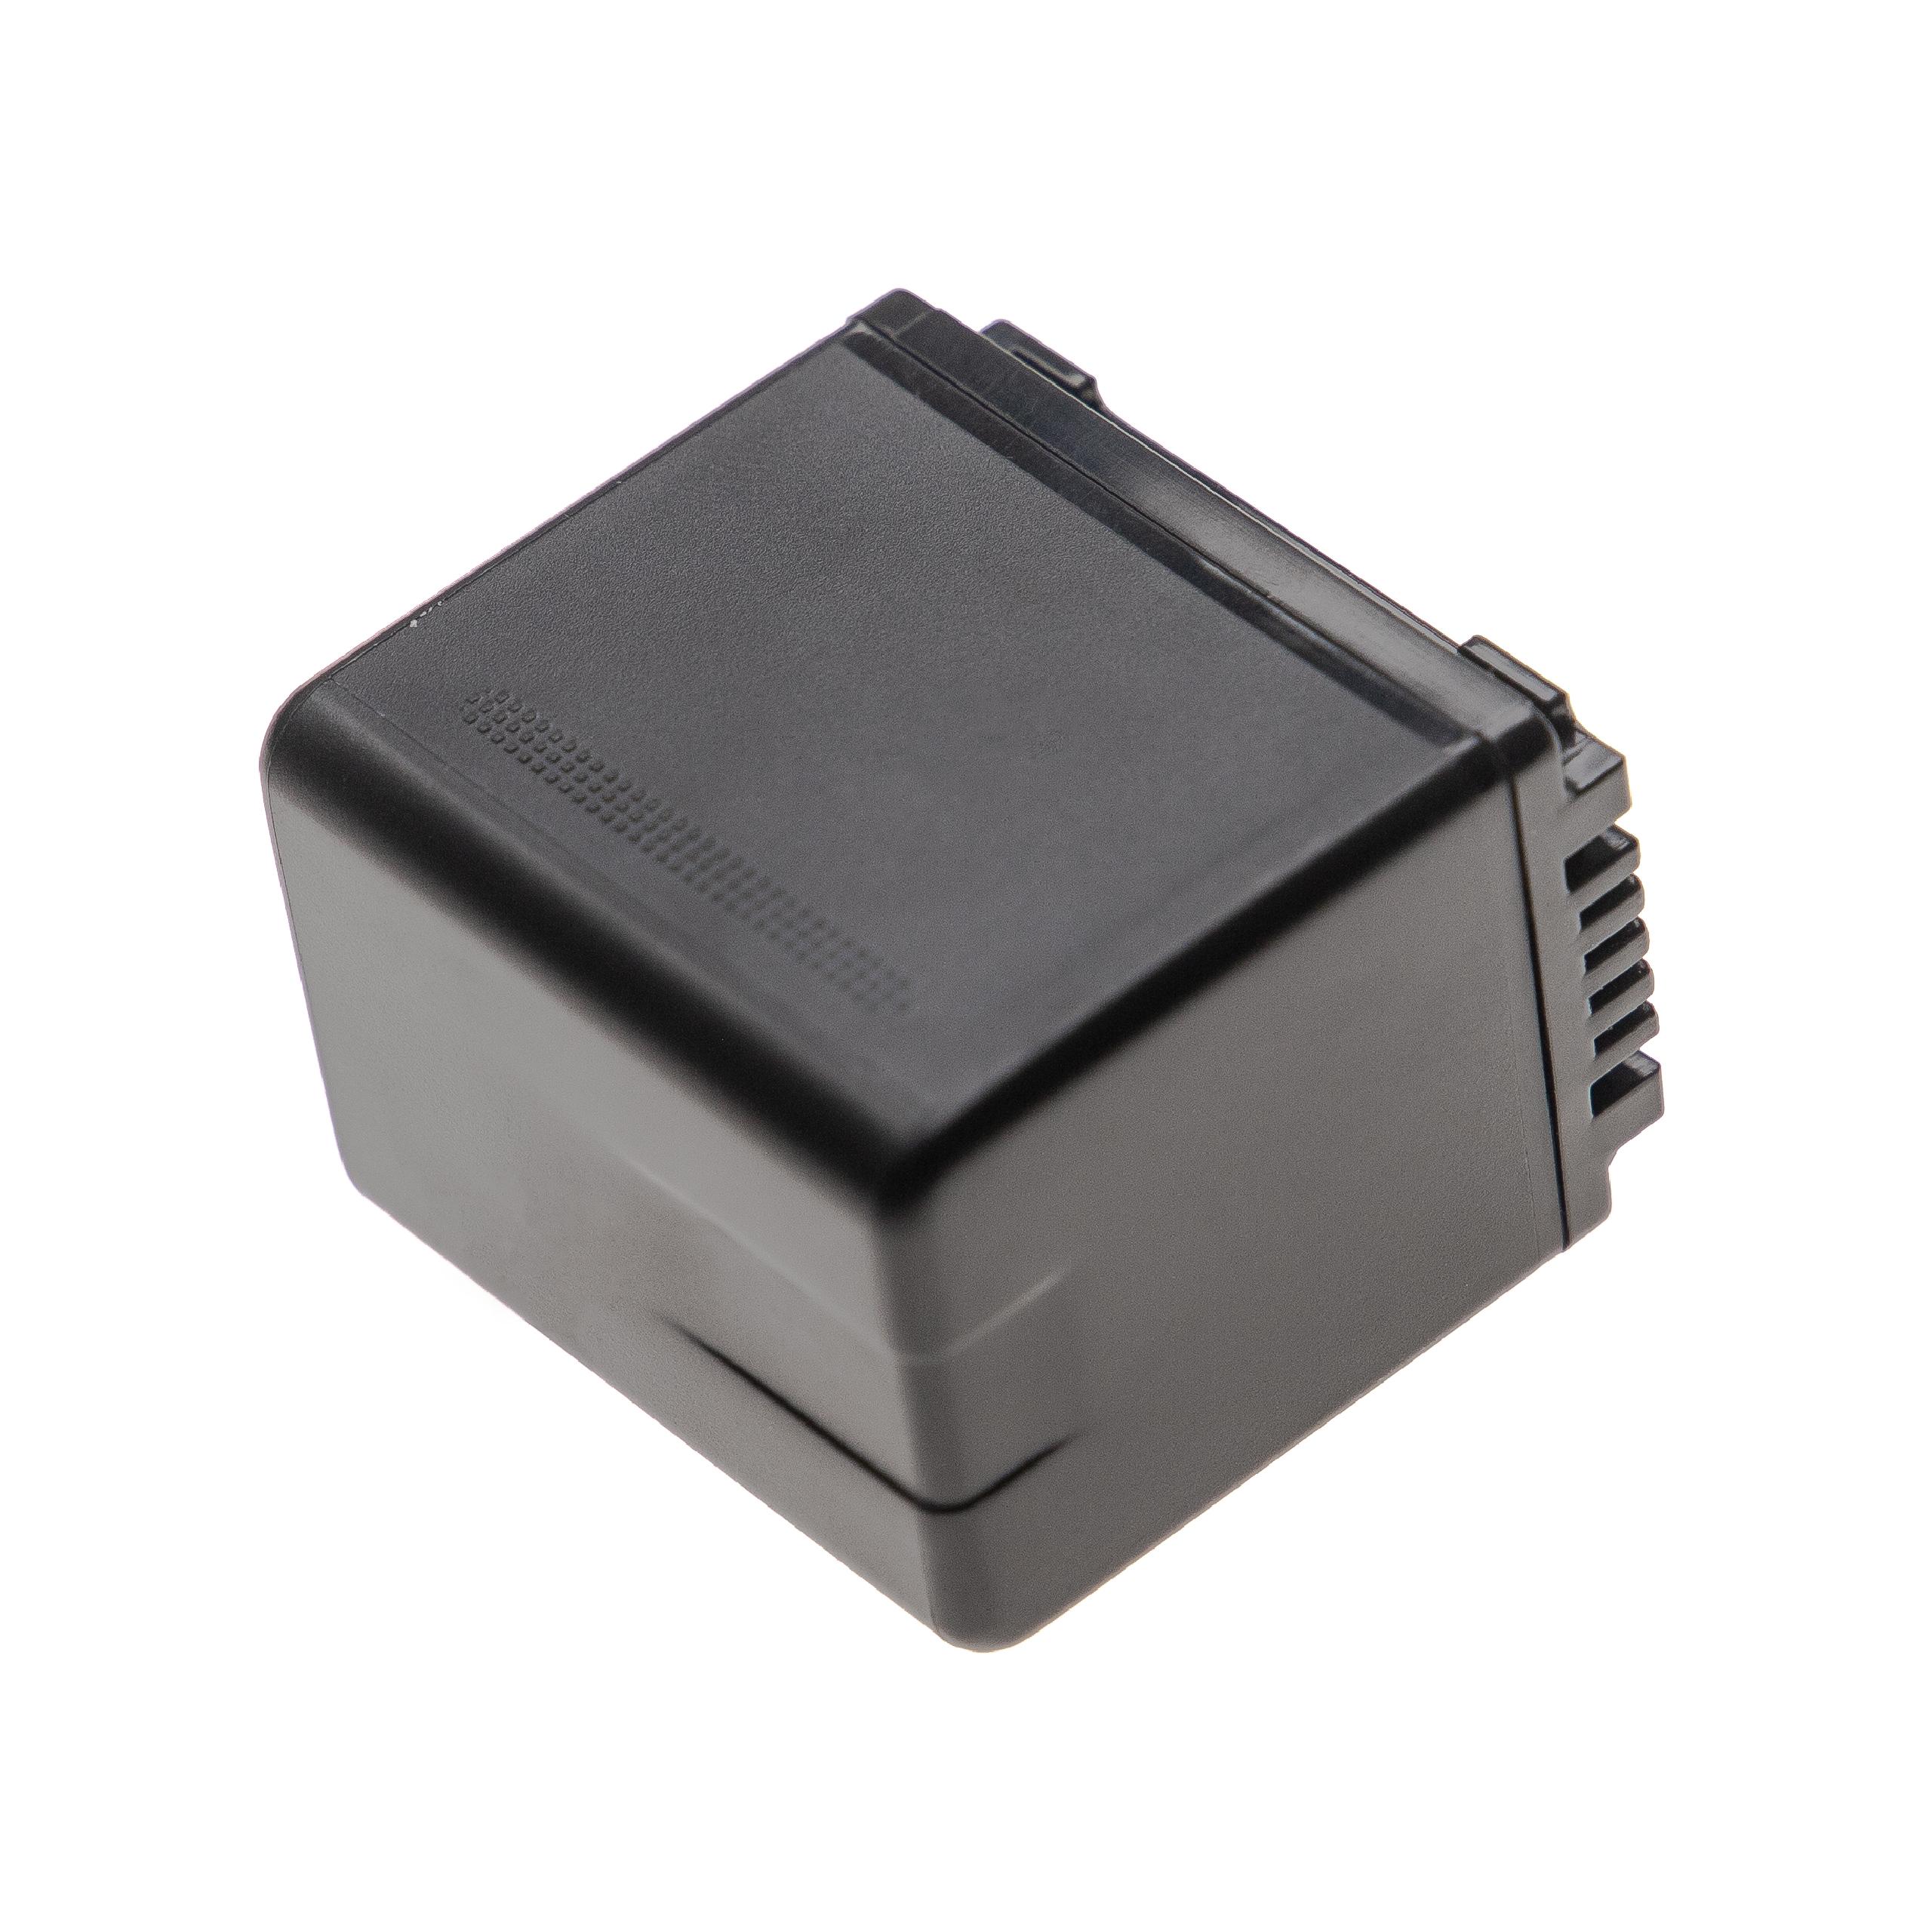 Videocamera Battery Replacement for Panasonic VW-VBK180, VW-VBK360, VW-VBT380, VW-VBT190 - 4040mAh 3.6V Li-Ion